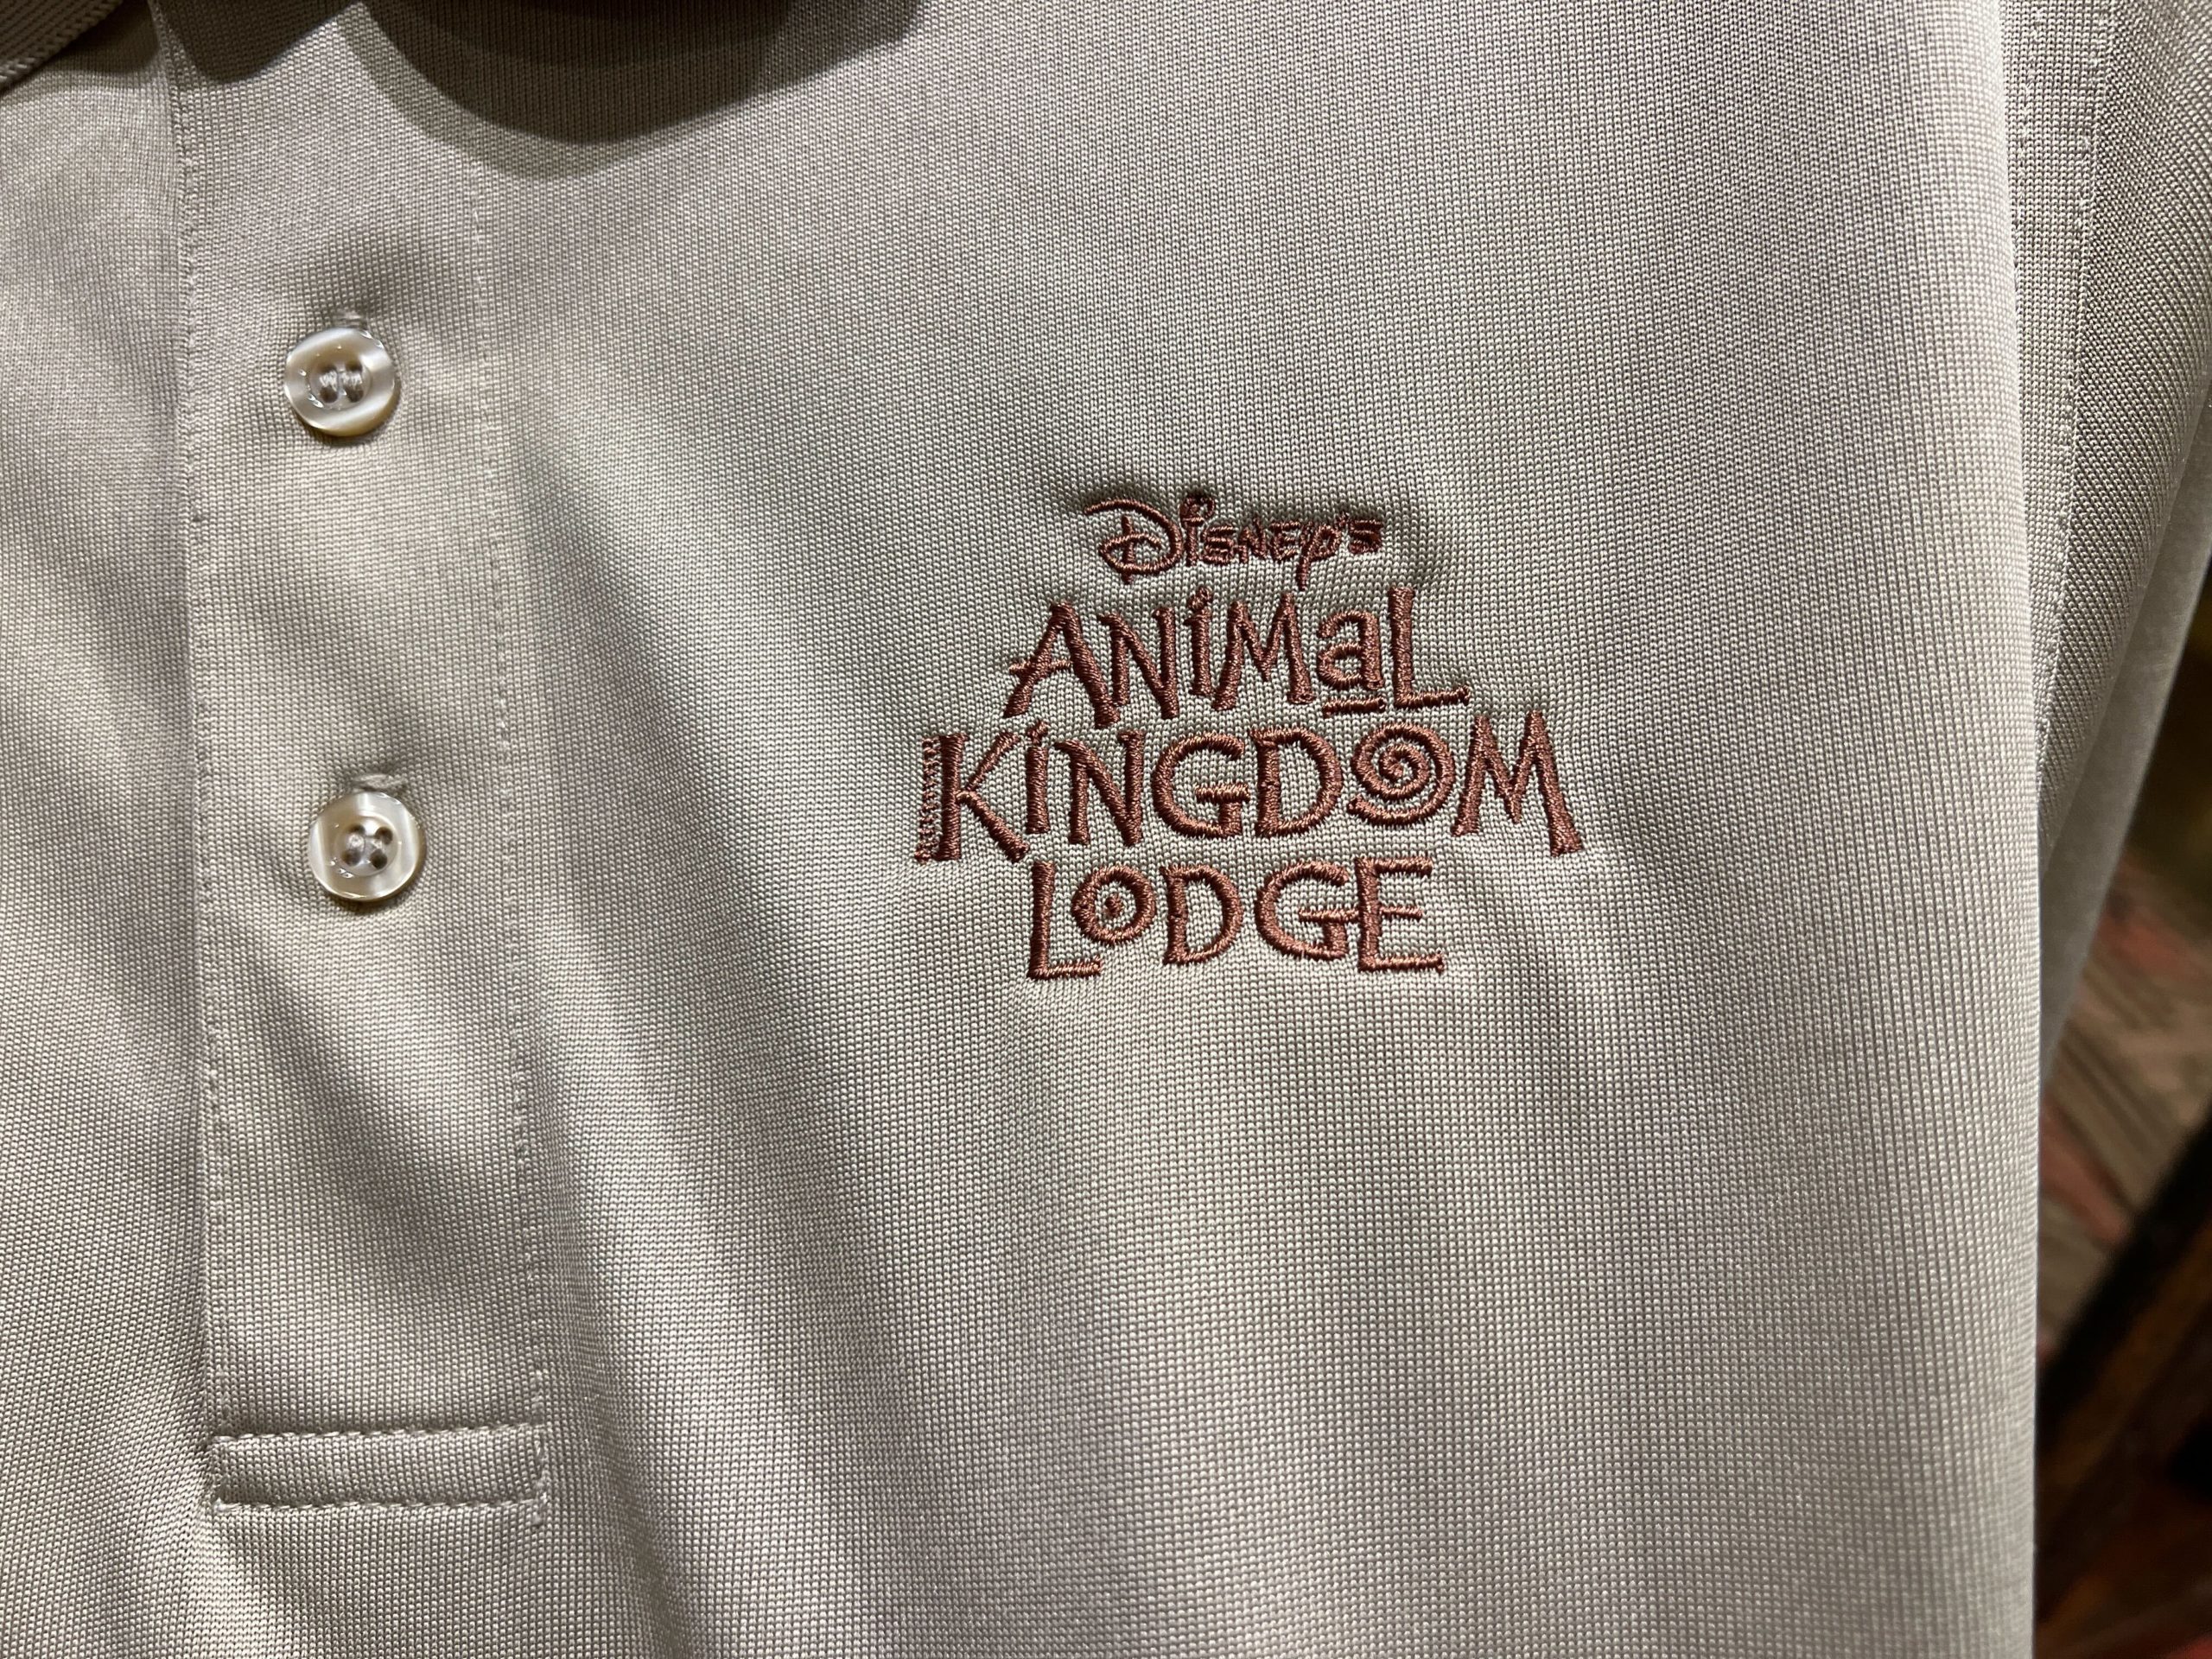 animal kingdom lodge merch